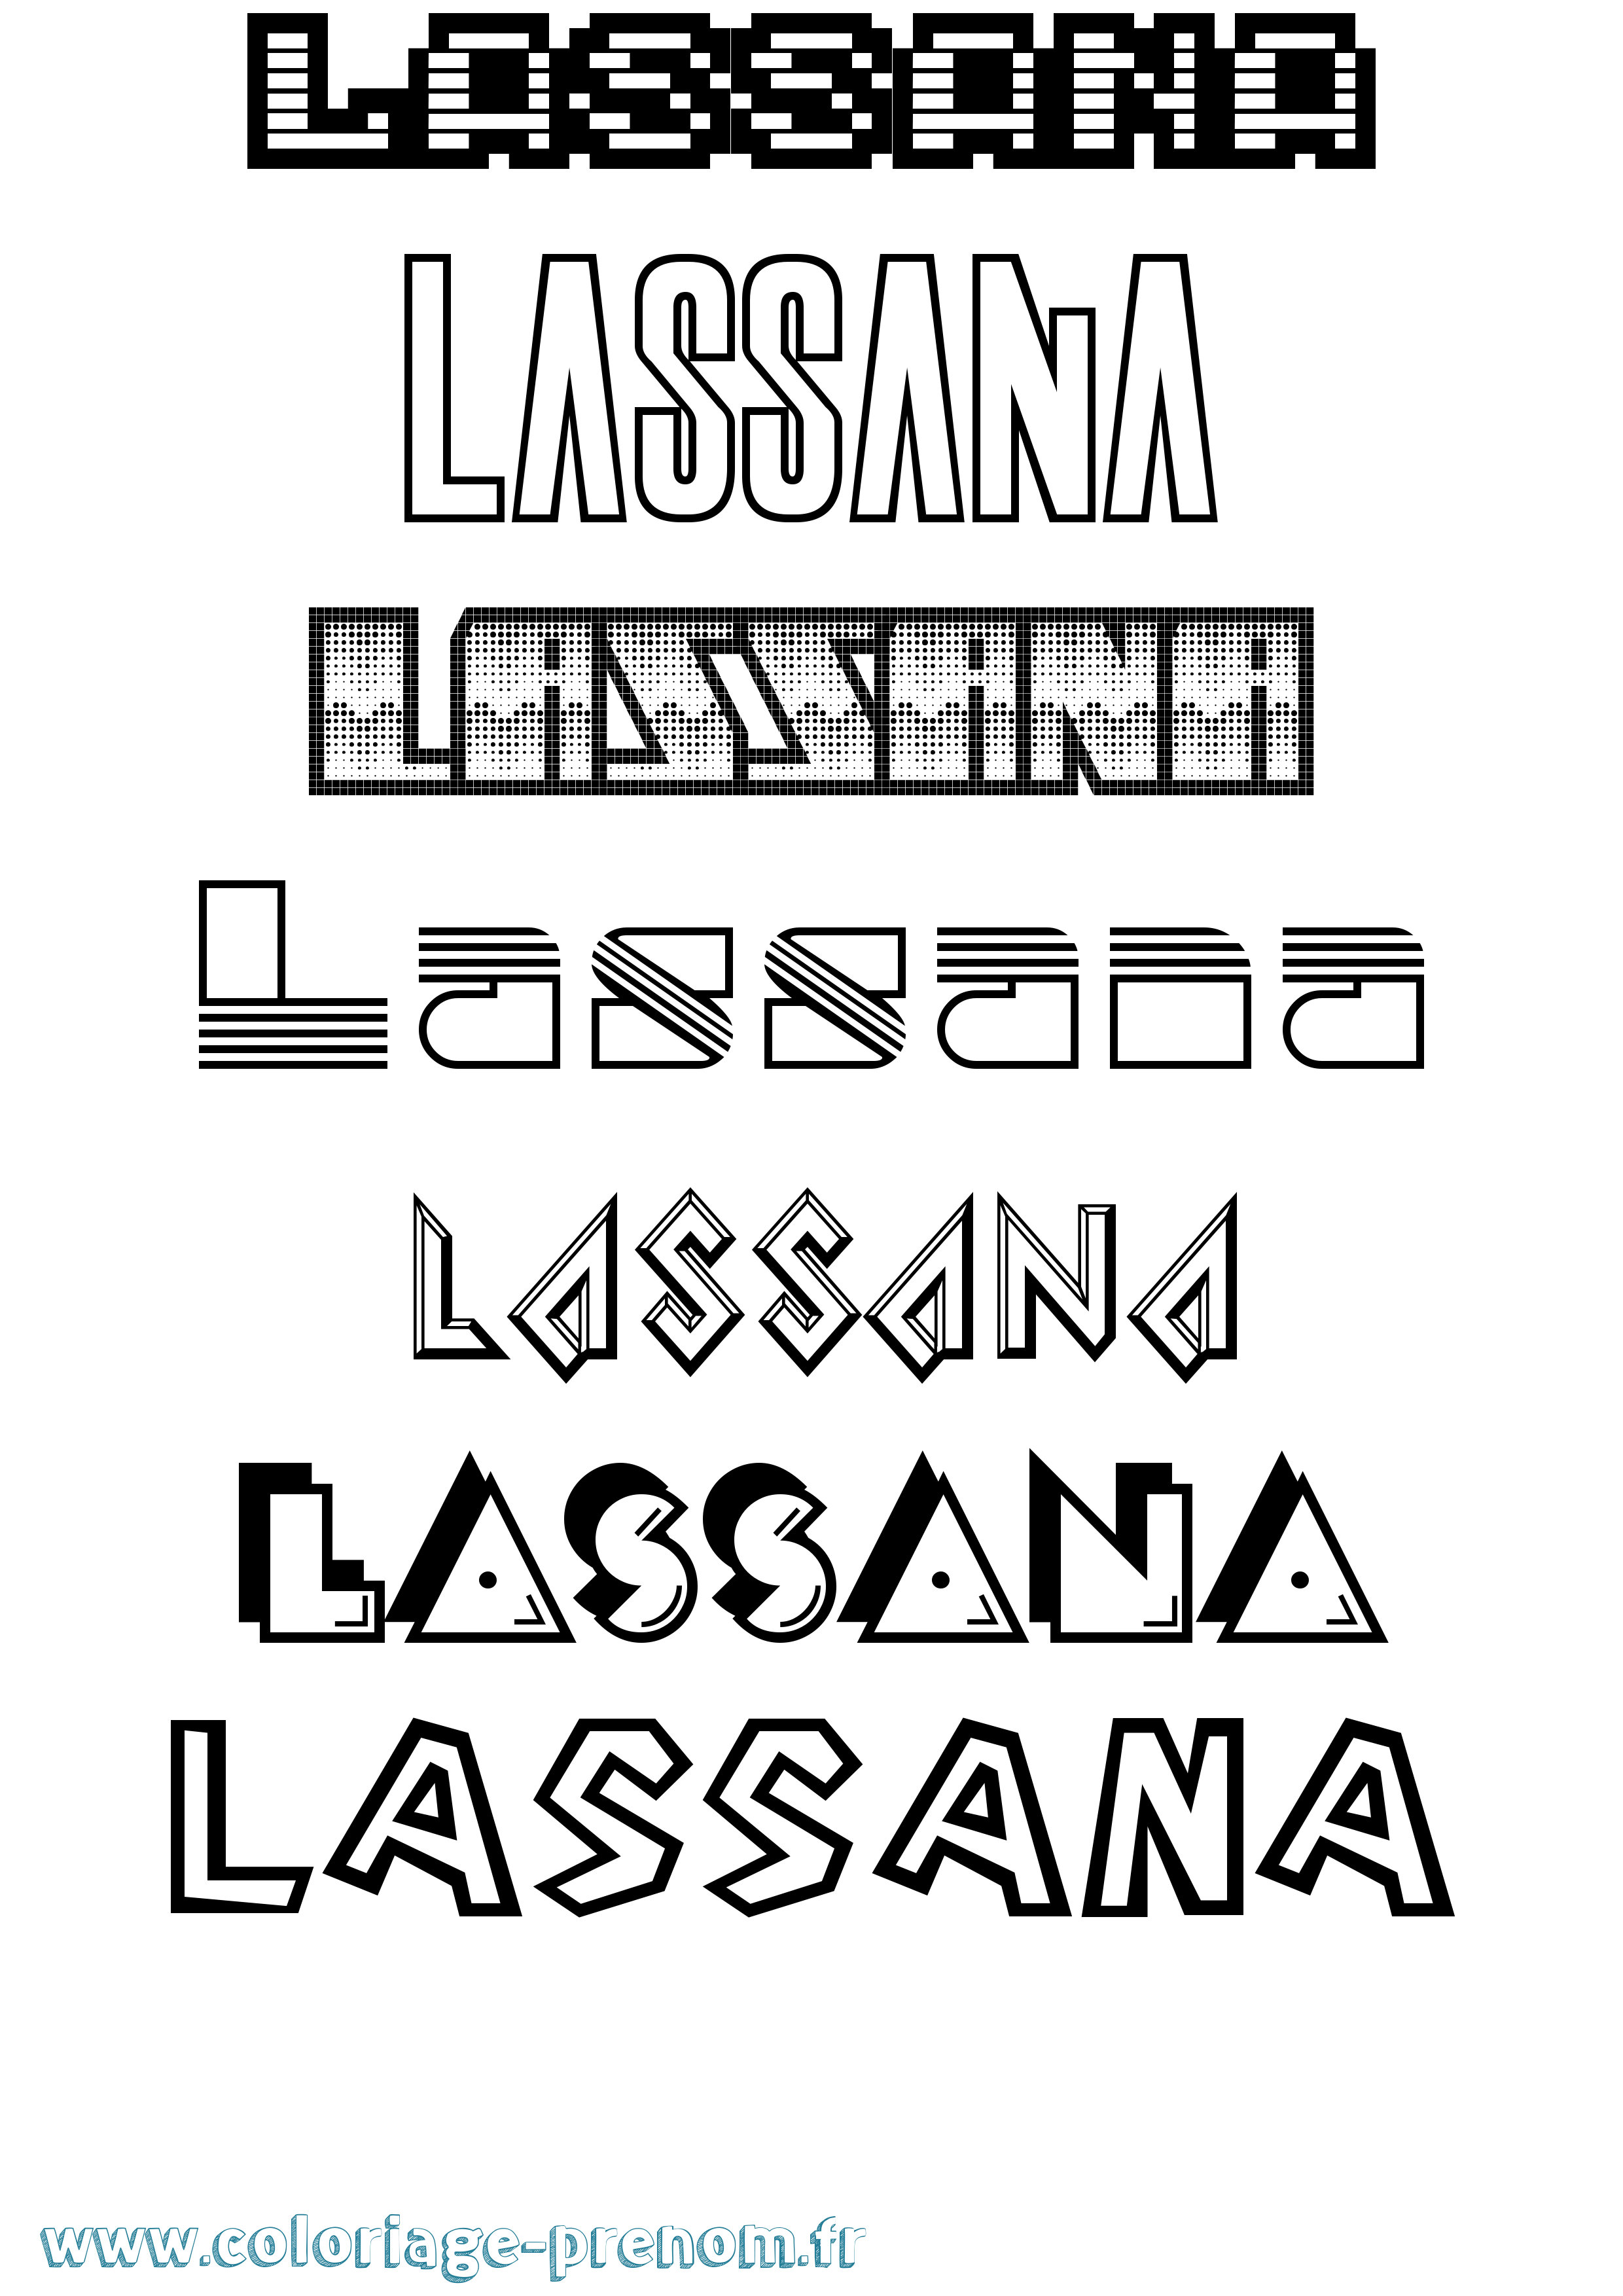 Coloriage prénom Lassana